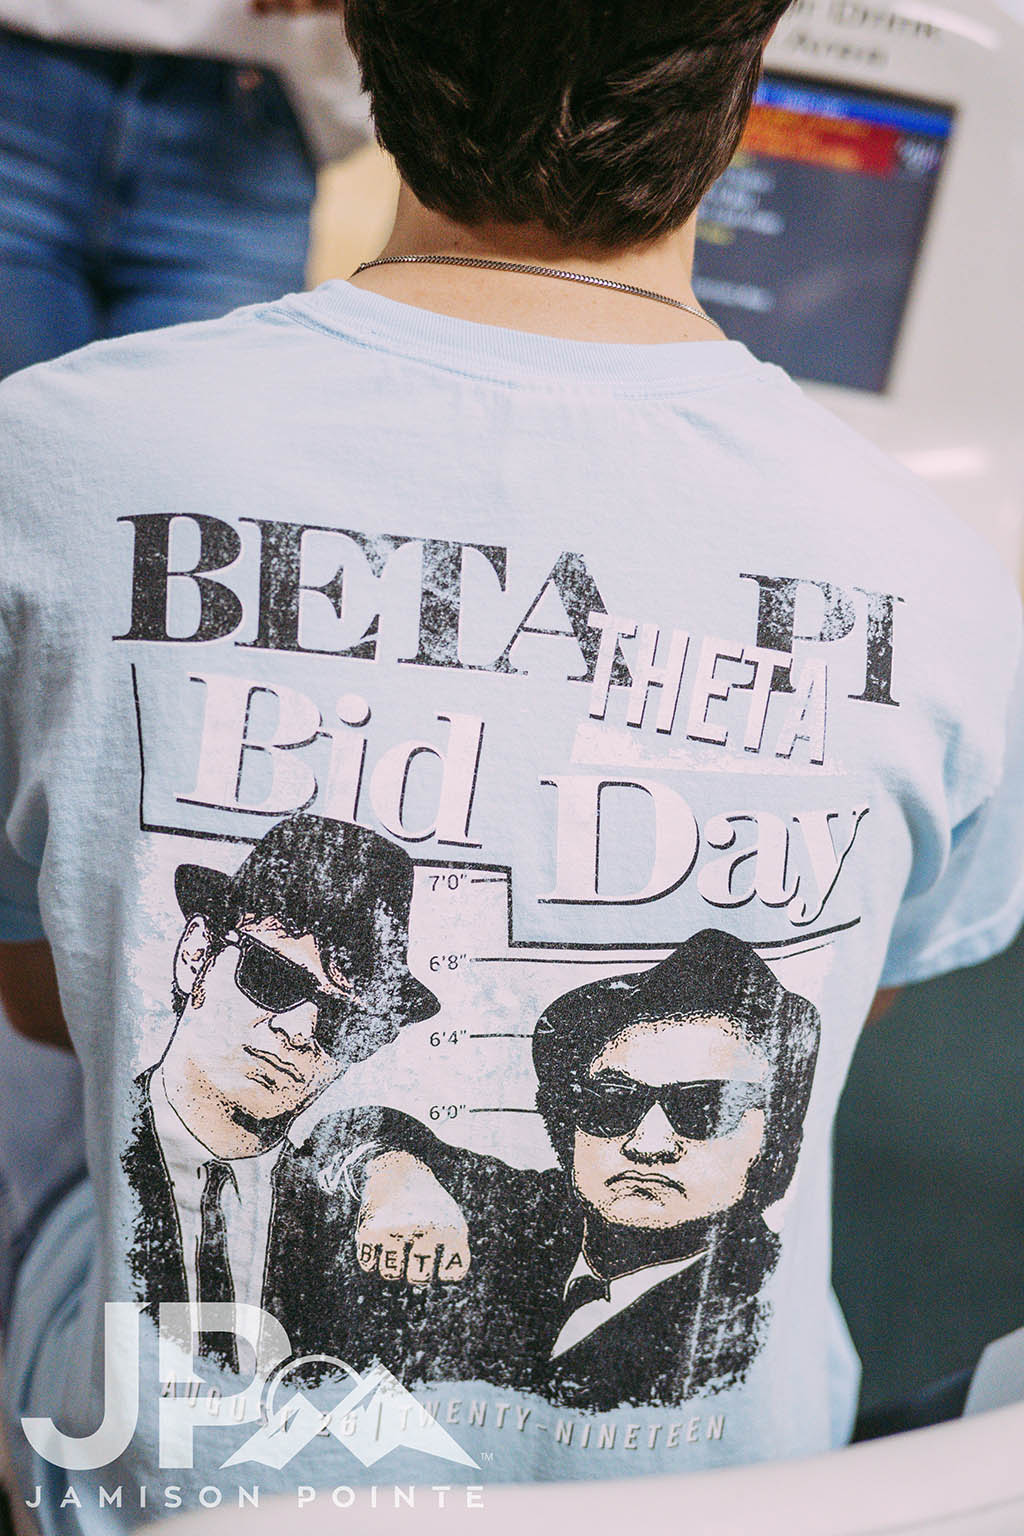 Beta Theta Pi Blues Brothers Bid Day Tee